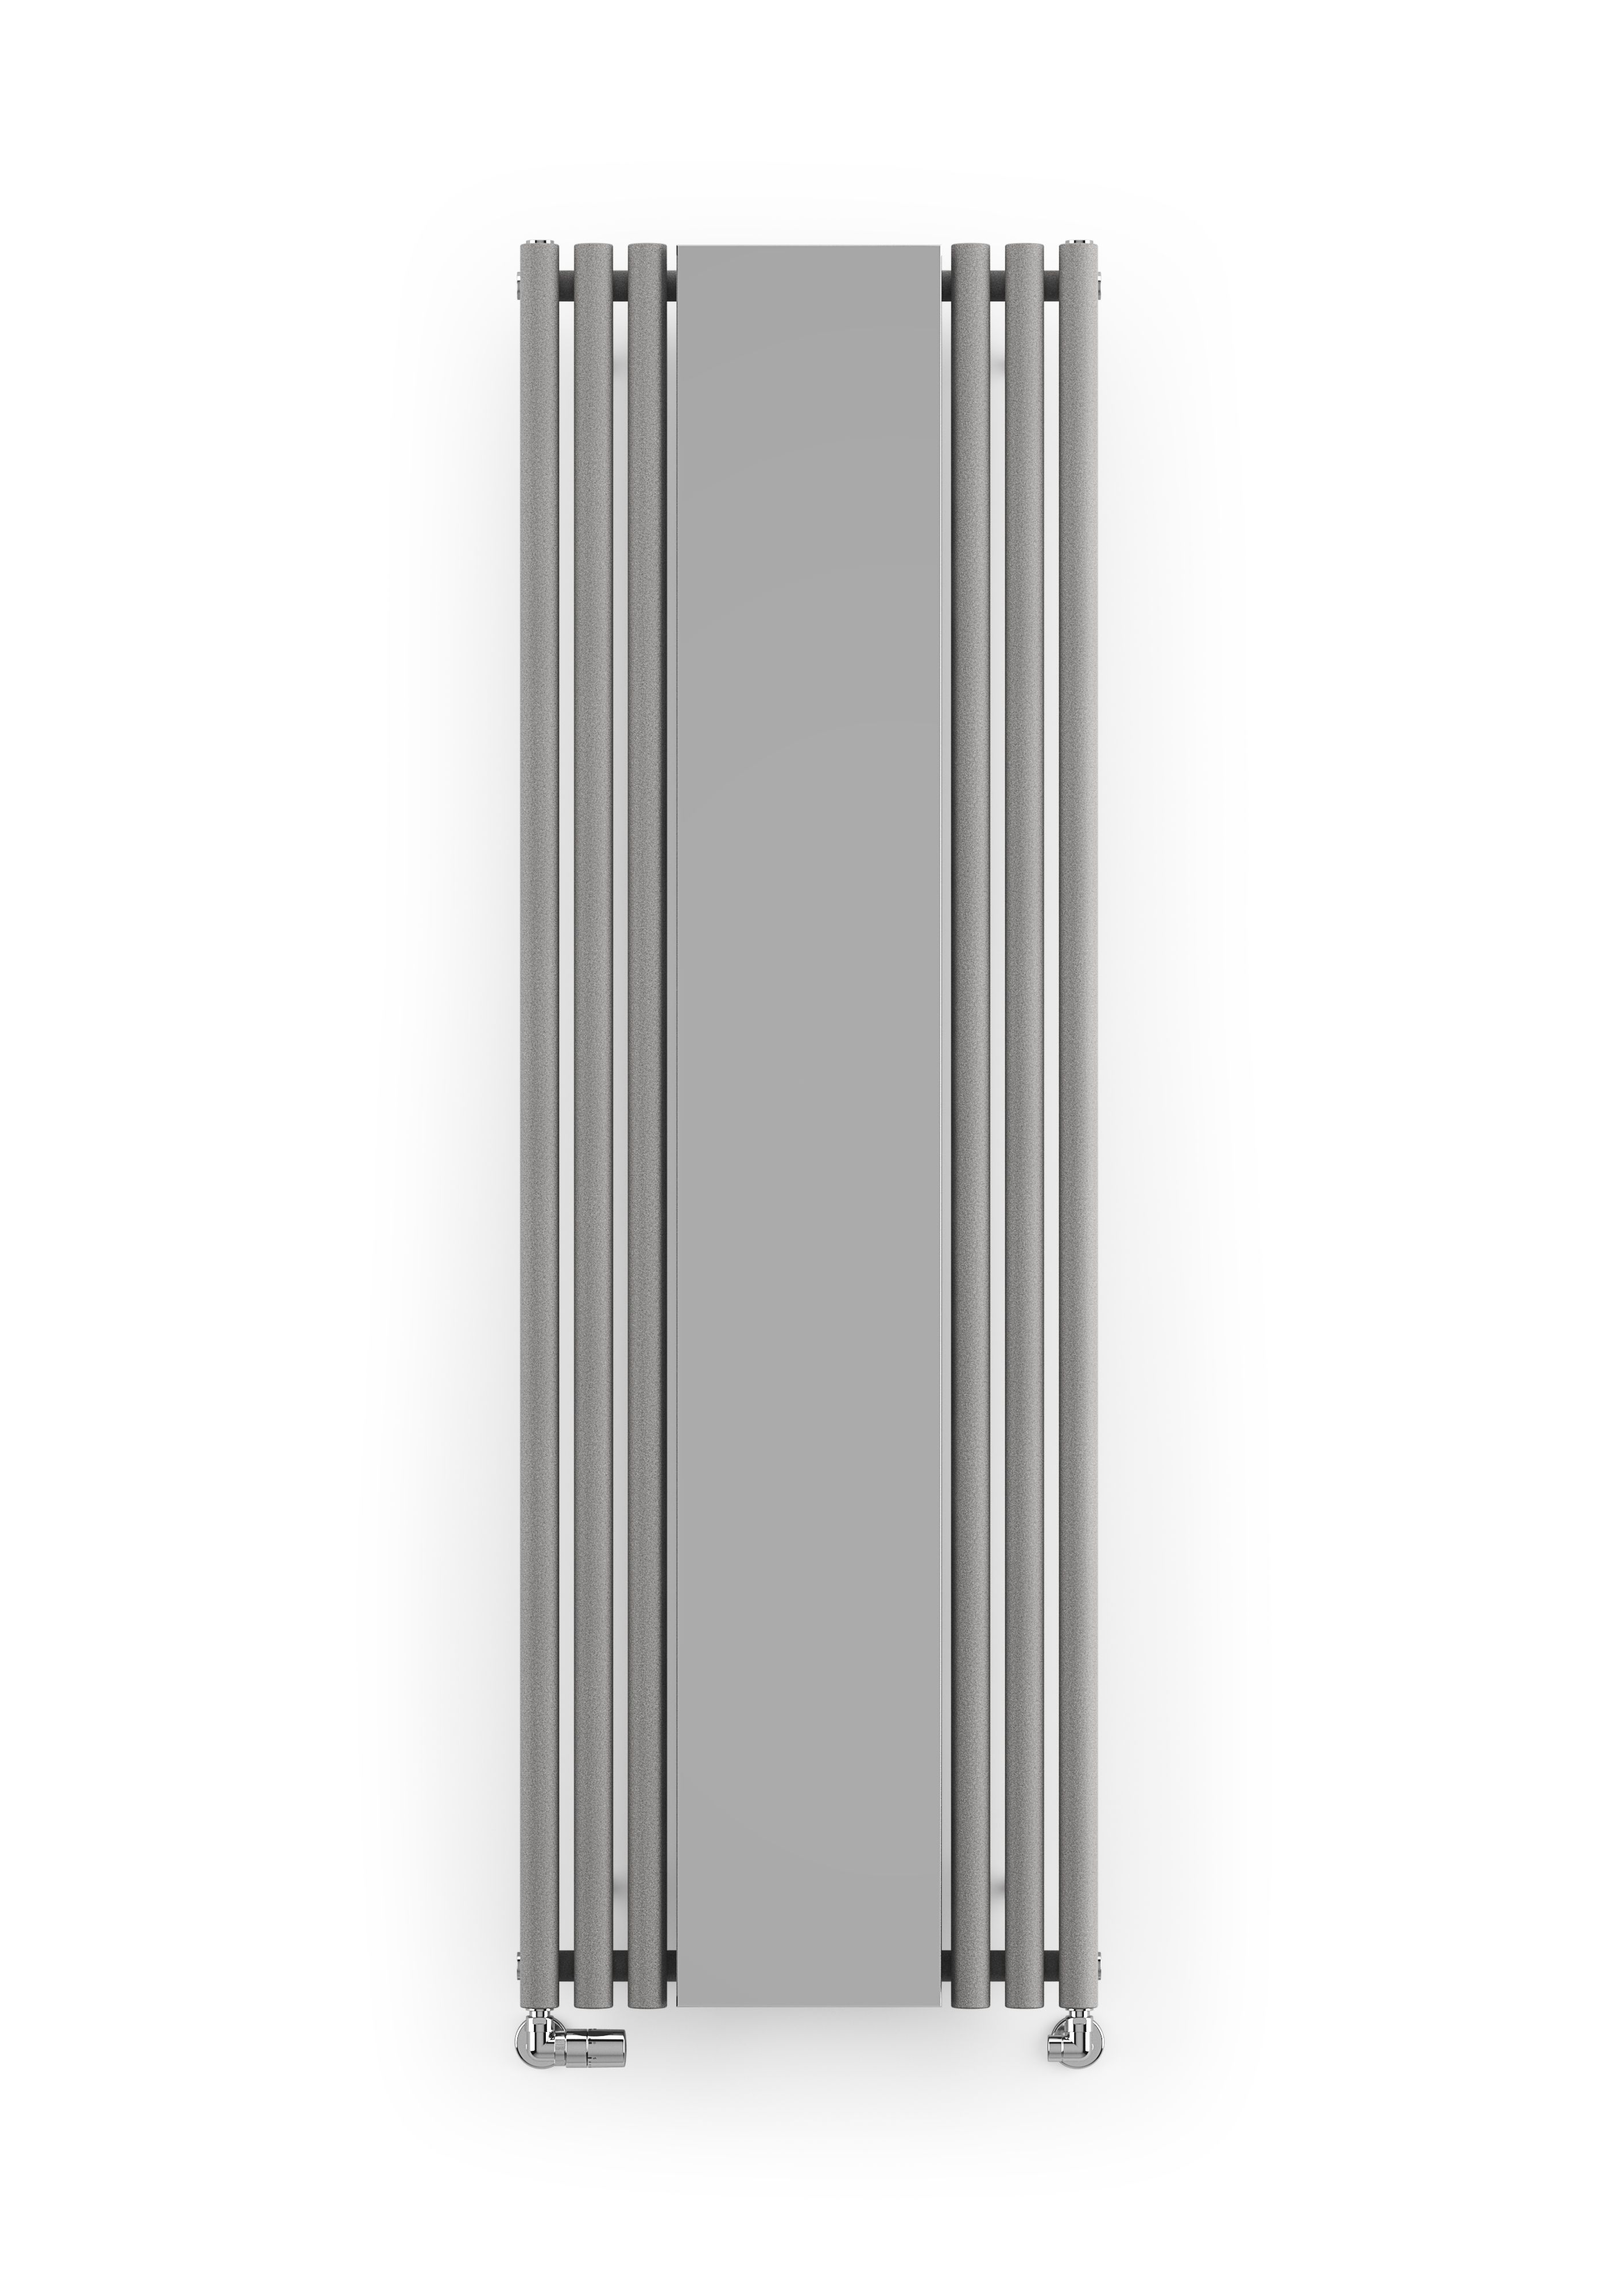 Terma Rolo mirror Salt n pepper Vertical Designer Radiator, (W)590mm x (H)1800mm